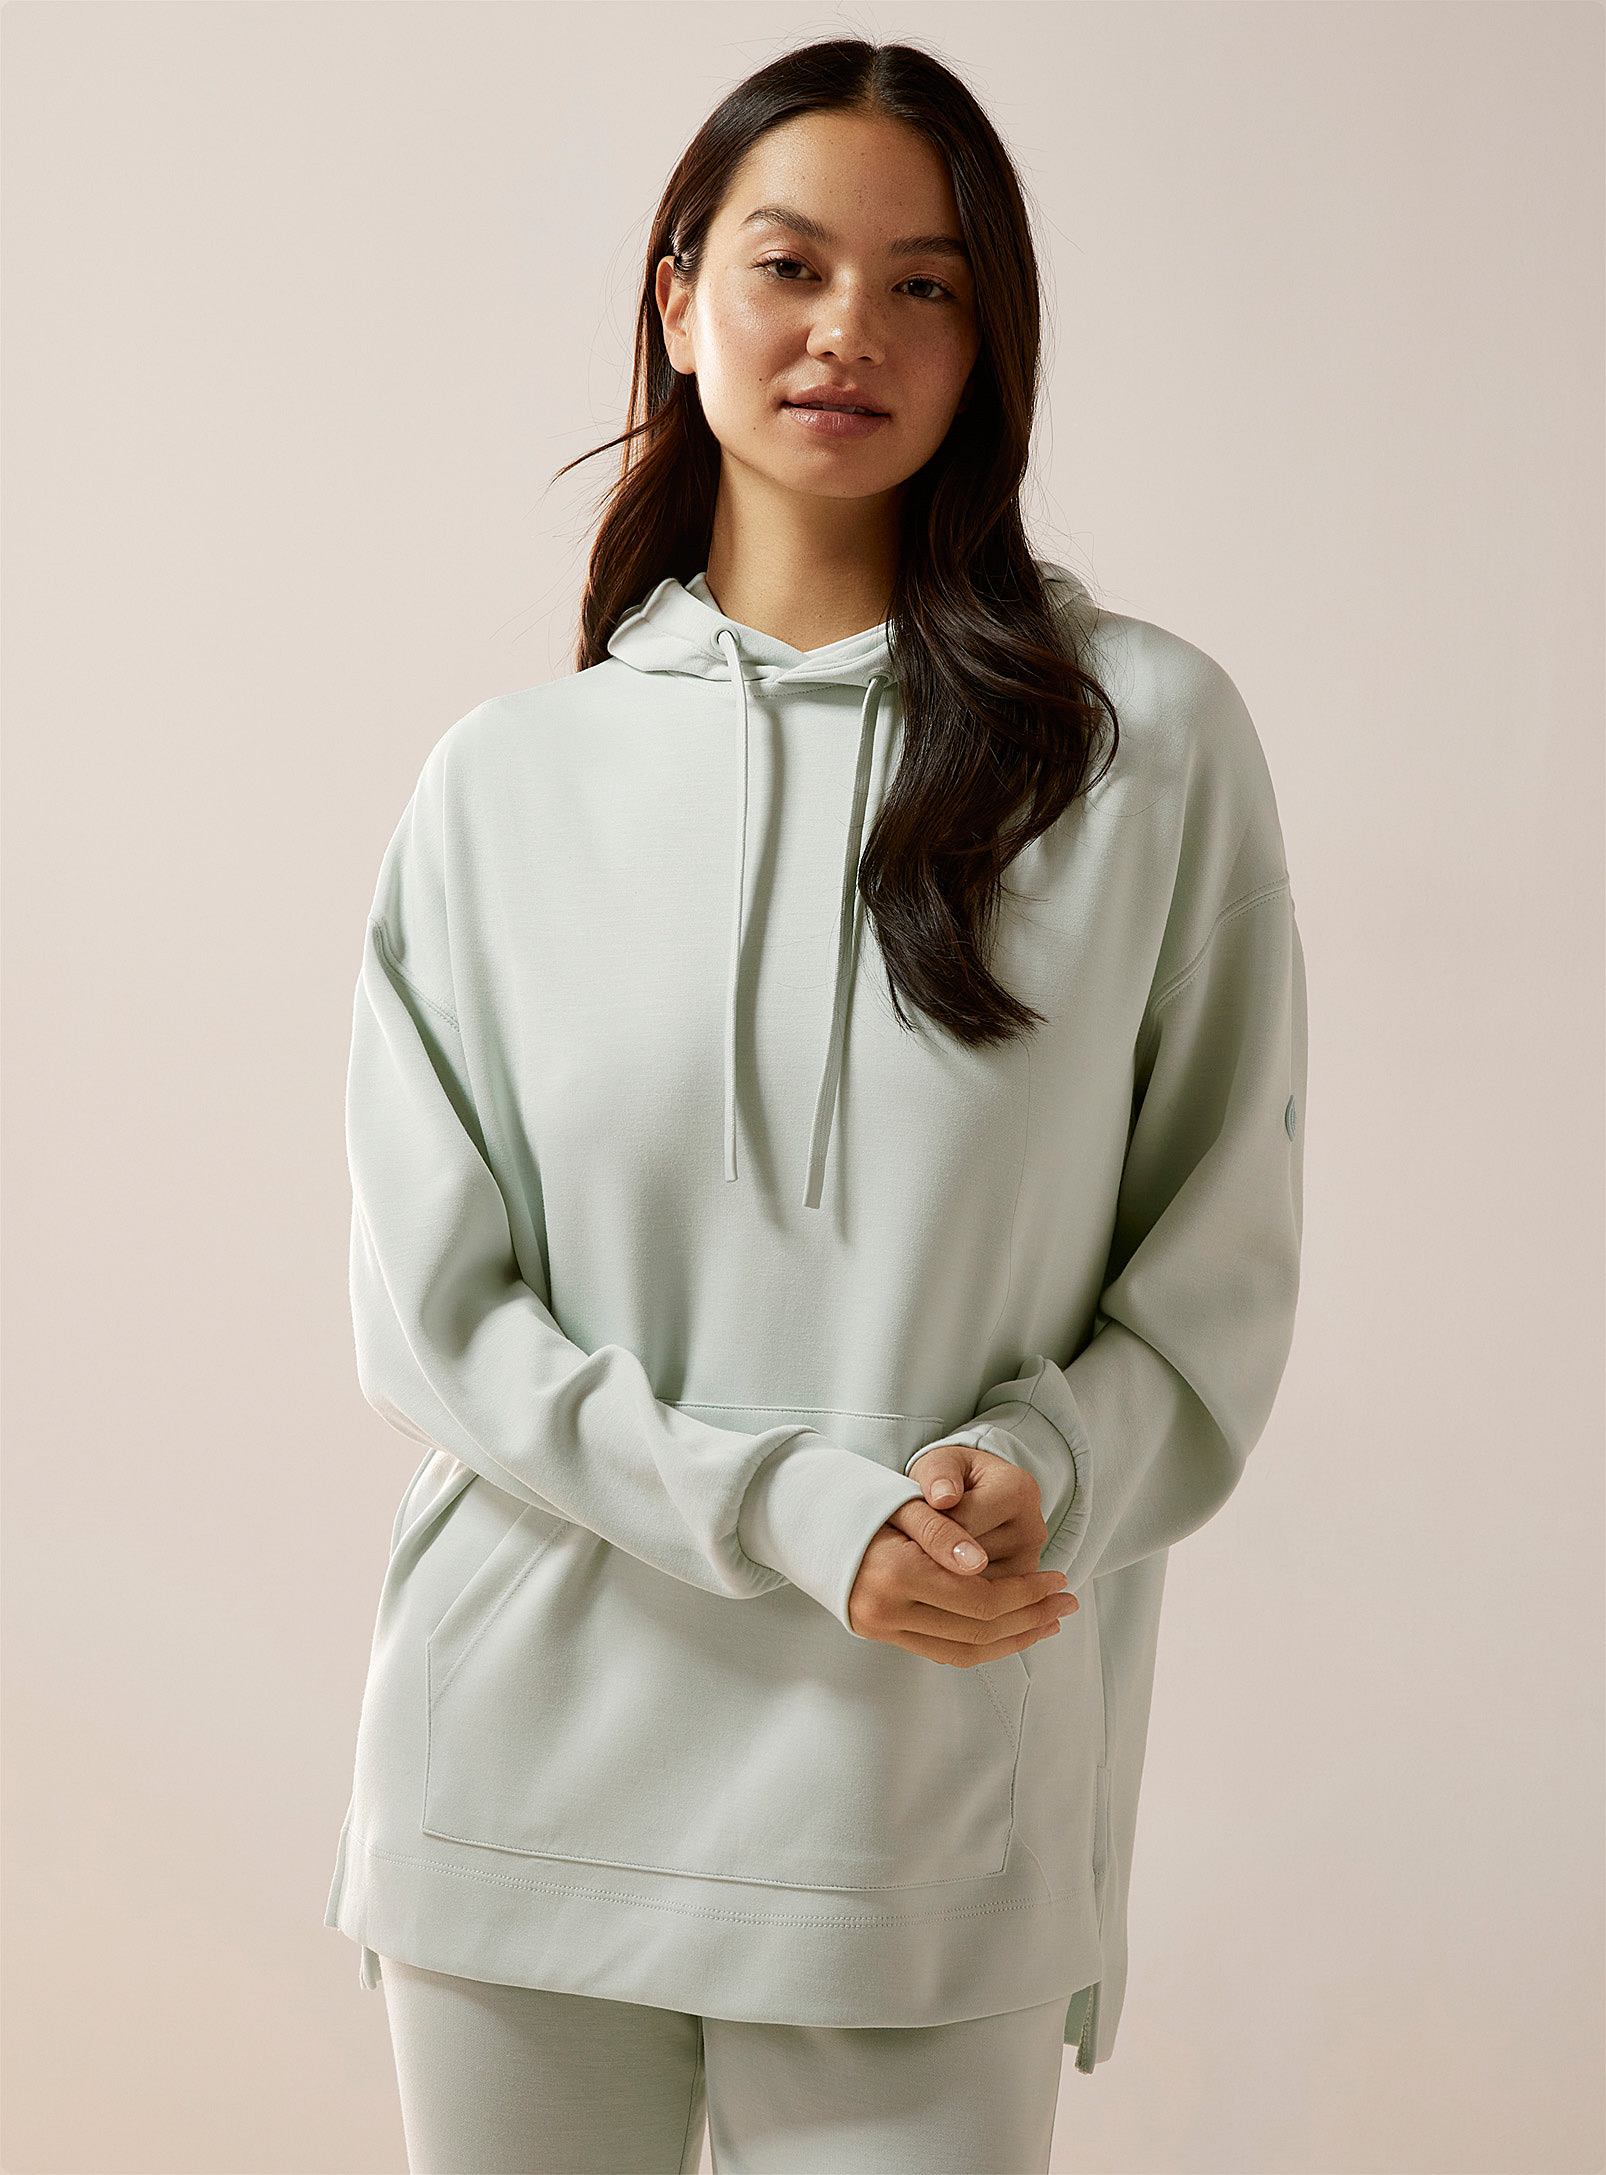 Everyday Sunday - Women's Soothing mint hooded lounge sweatshirt